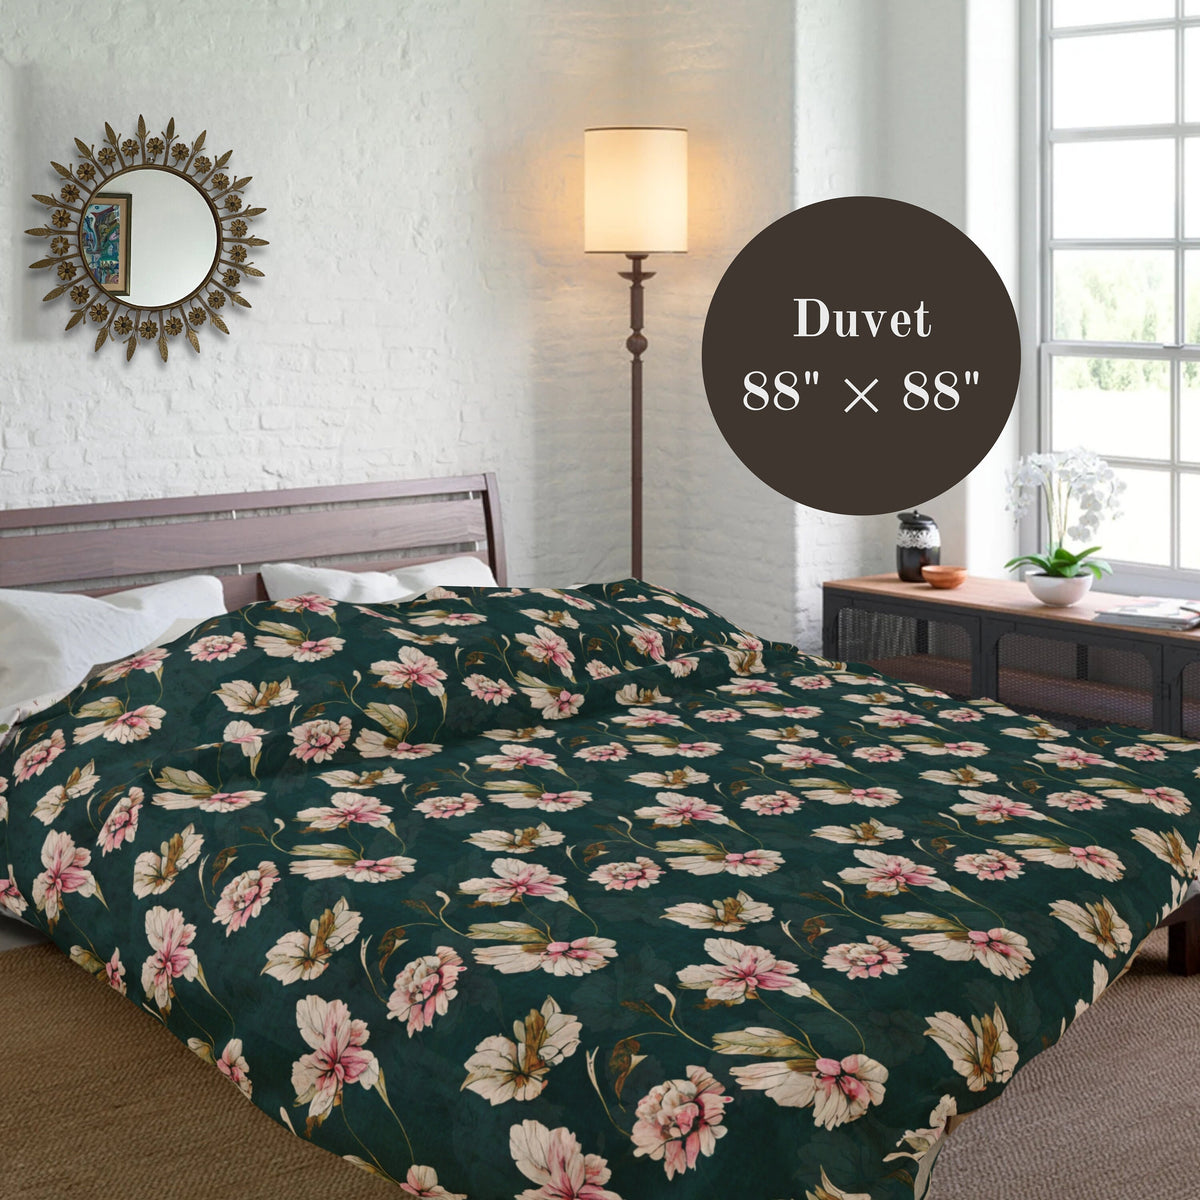 Flower Duvet Cover 3 Piece Bedding Set Cottagecore Bedroom Decor Floral Pillow Sham and Comforter Bed 3 Pc Set Dark Floral Duvet and Shams